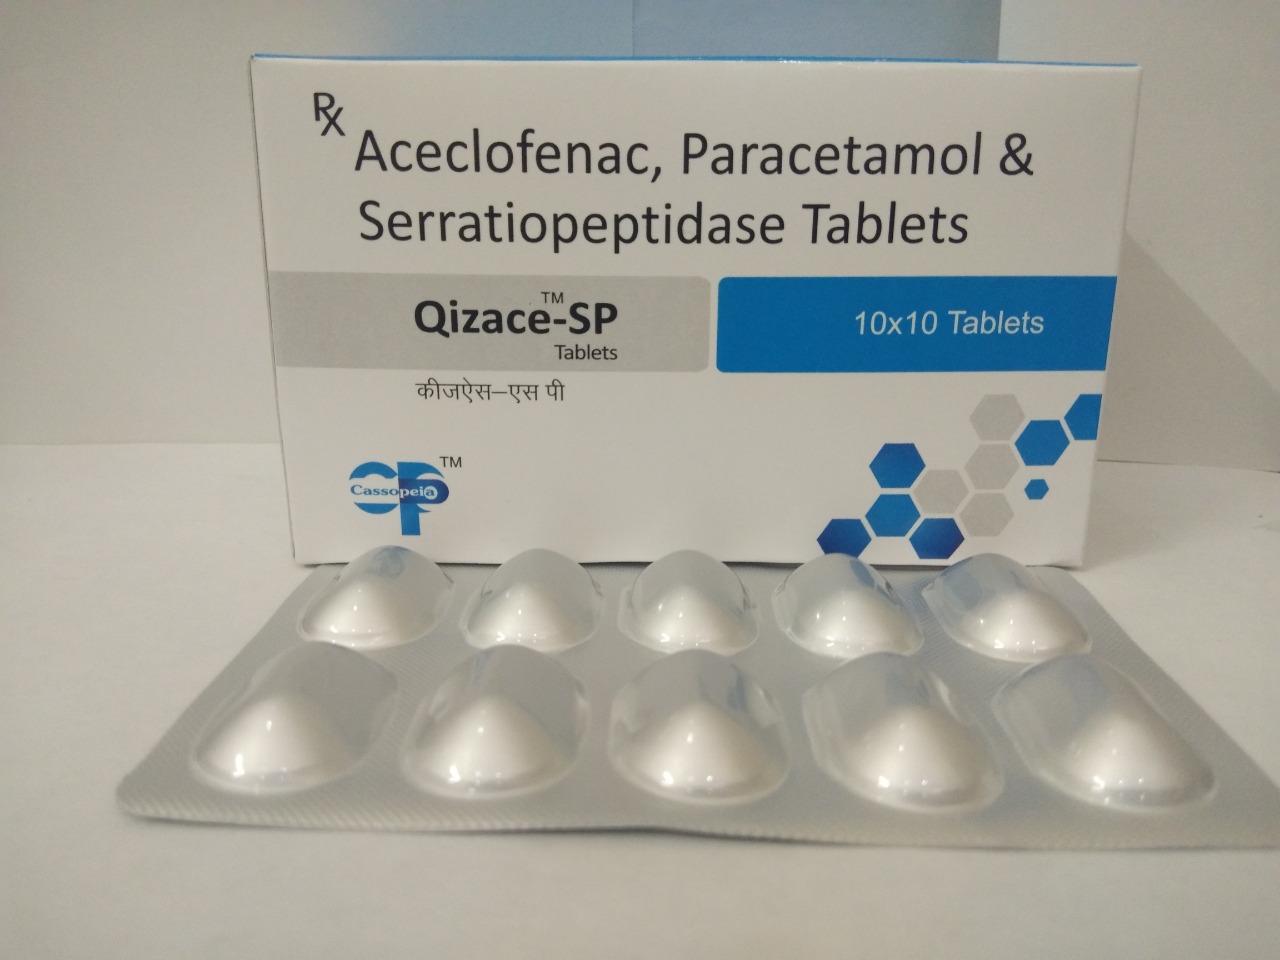 Product Name: Qizace SP, Compositions of Qizace SP are Aceclofenac, Paracetamol & Serratiopeptidase Tablets - Cassopeia Pharmaceutical Pvt Ltd